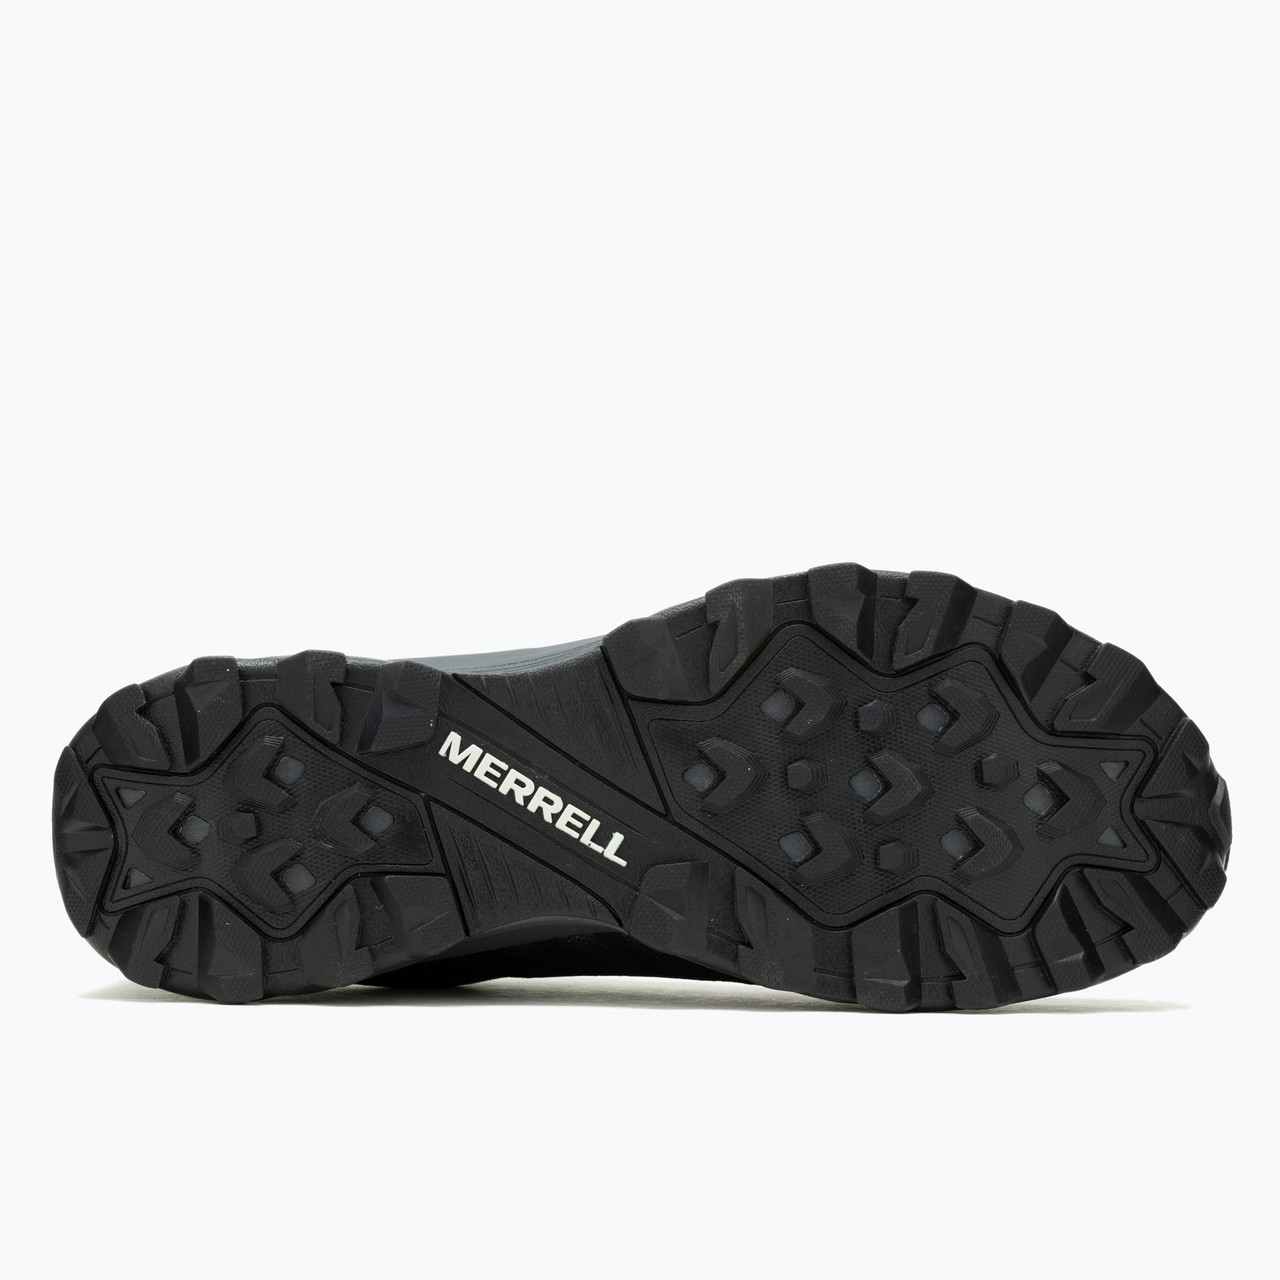 Speed Eco Waterproof Light Trail Shoes Black/Asphalt